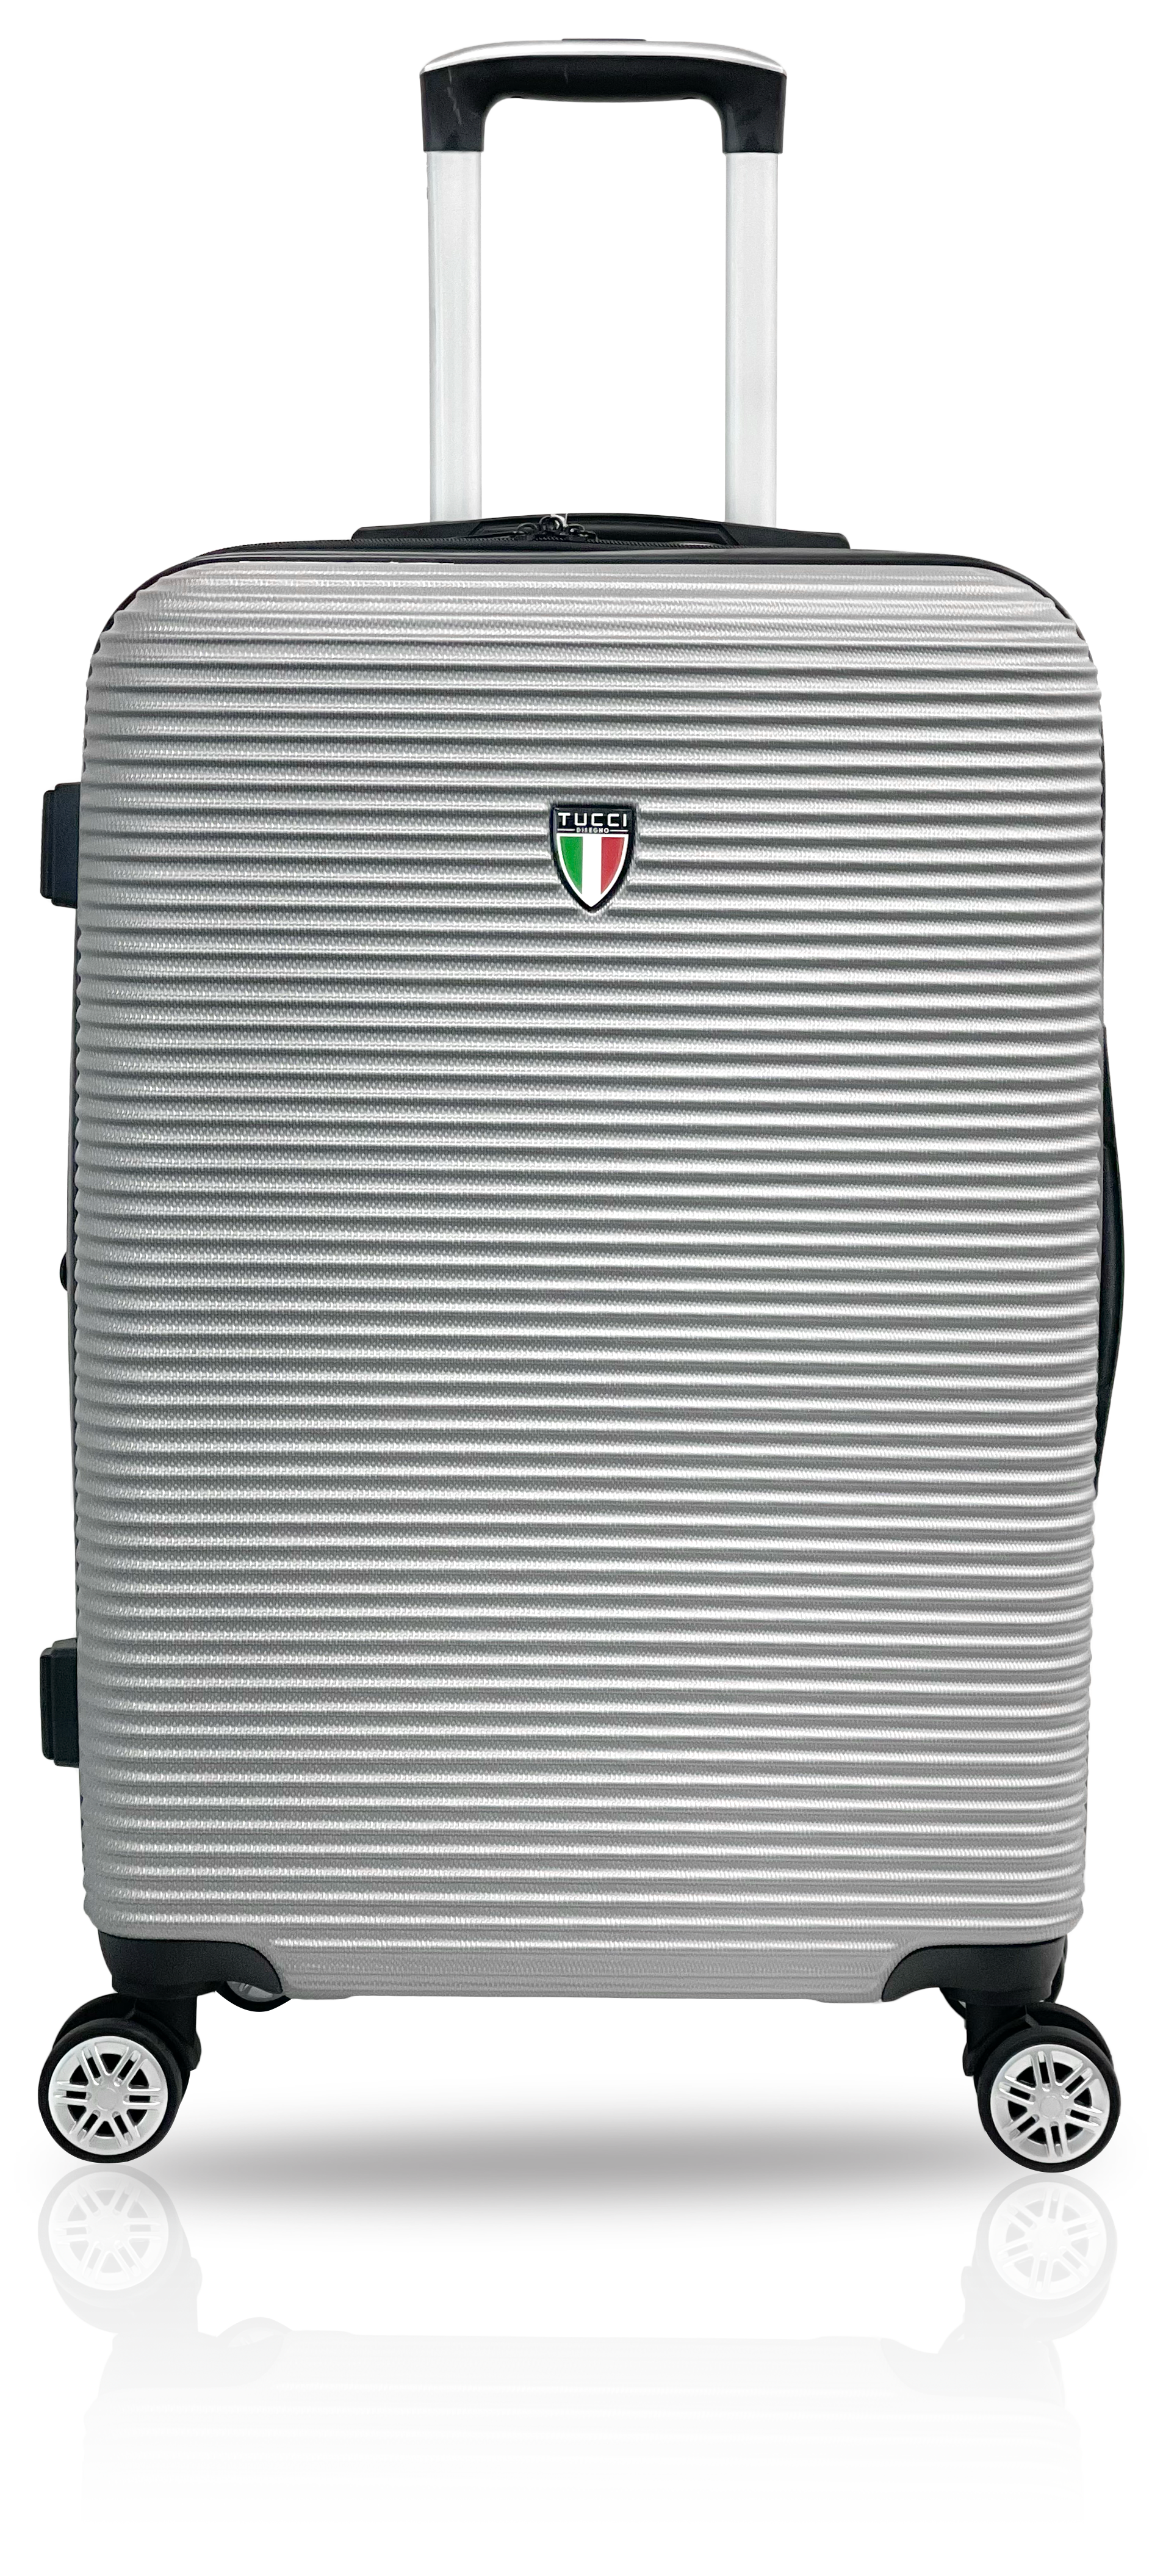 TUCCI Italy SCOPERTA ABS 24" Medium Expandable Travel Suitcase